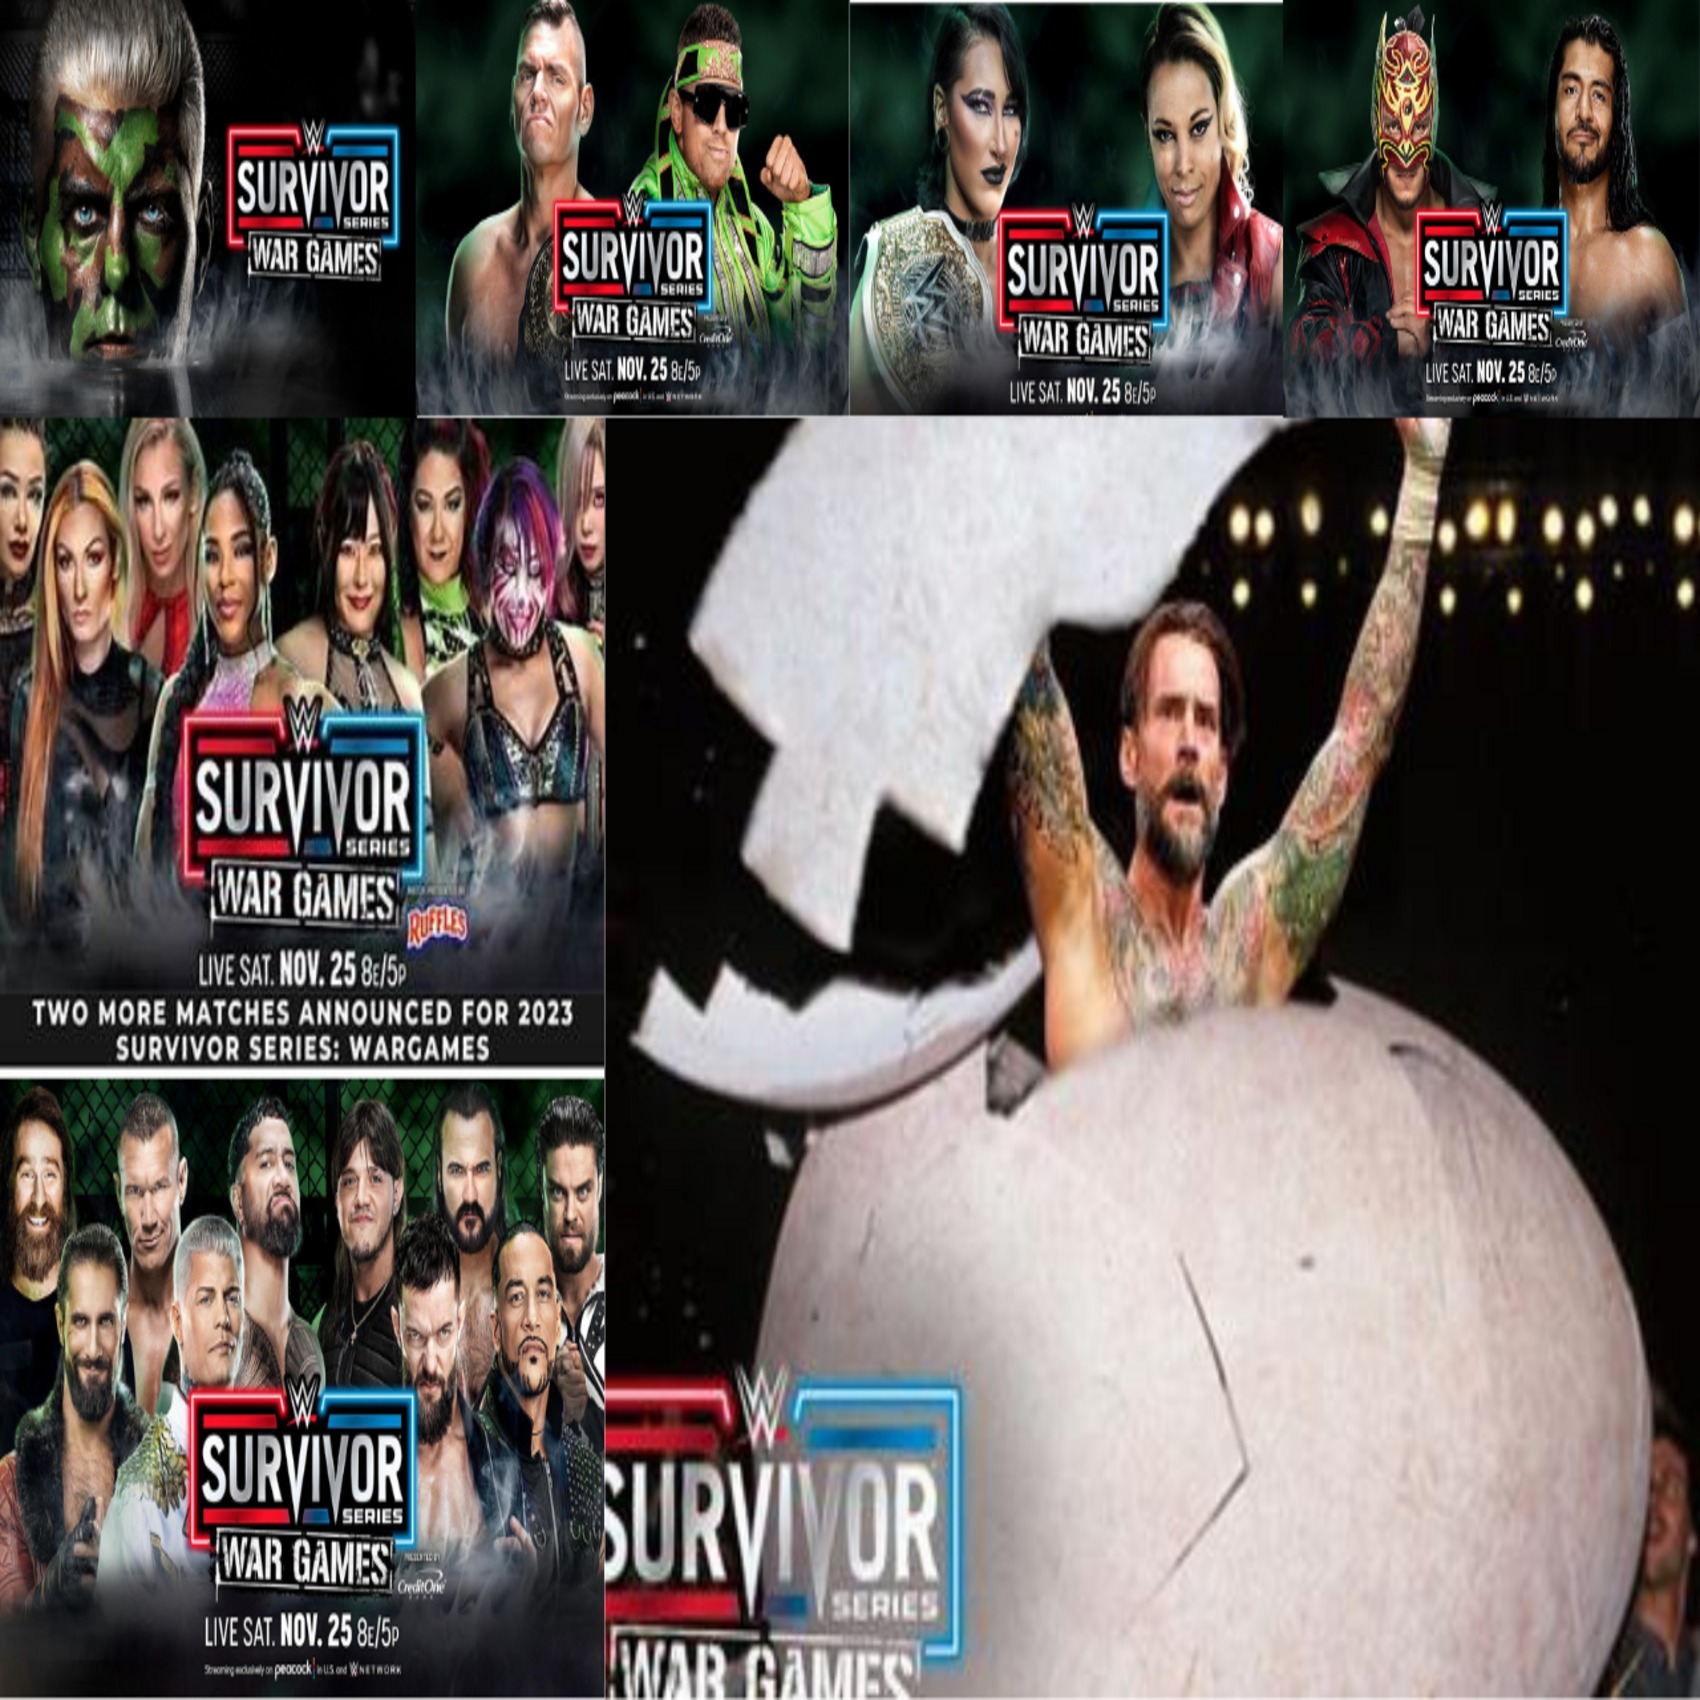 Bayley vs Becky Lynch a steel cage match set on next week's Monday Night  Raw : r/BeckyLynch